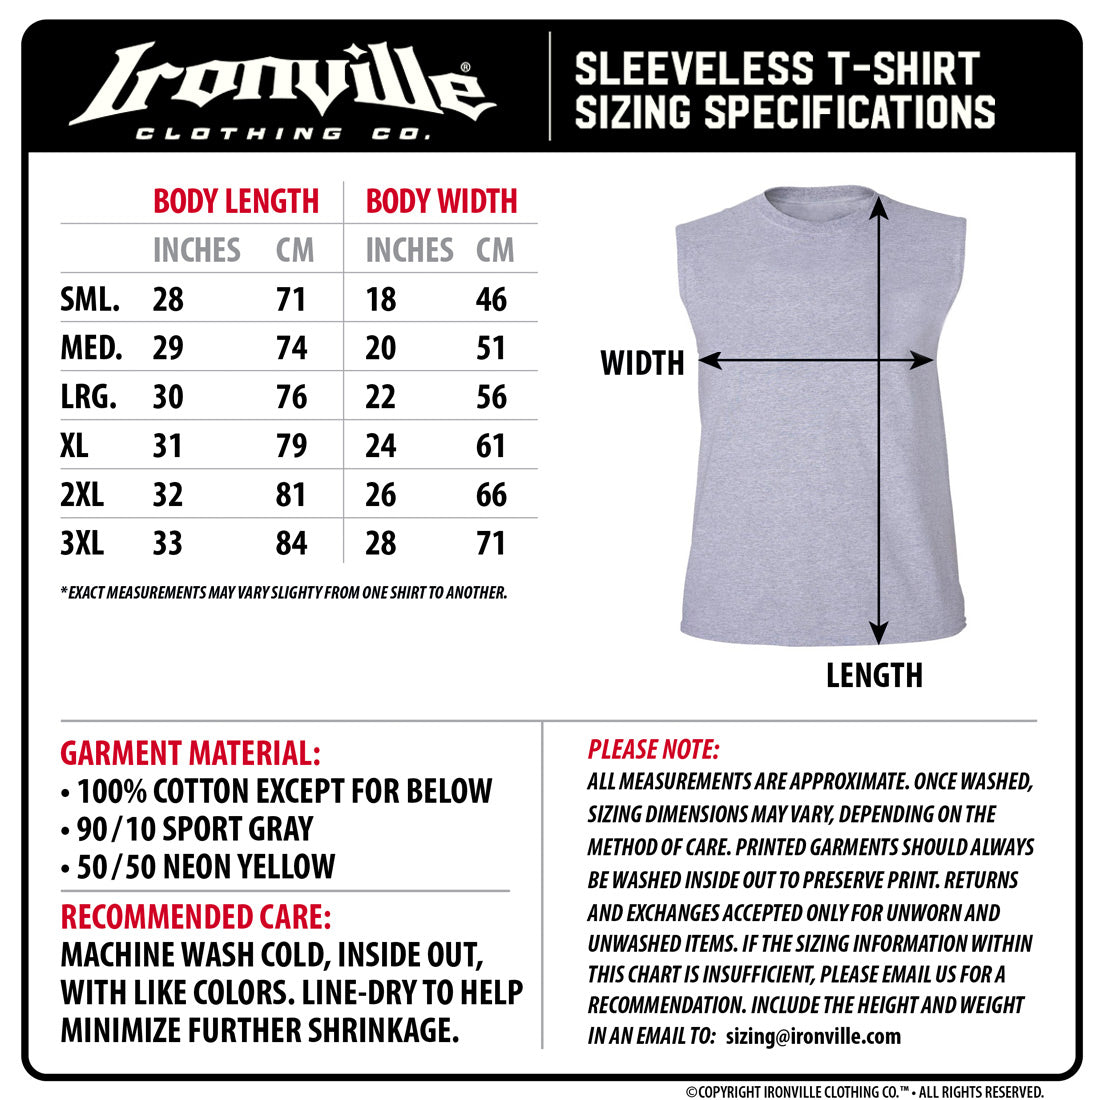 Ironville BATTLE TESTED Sleeveless Muscle T-shirt